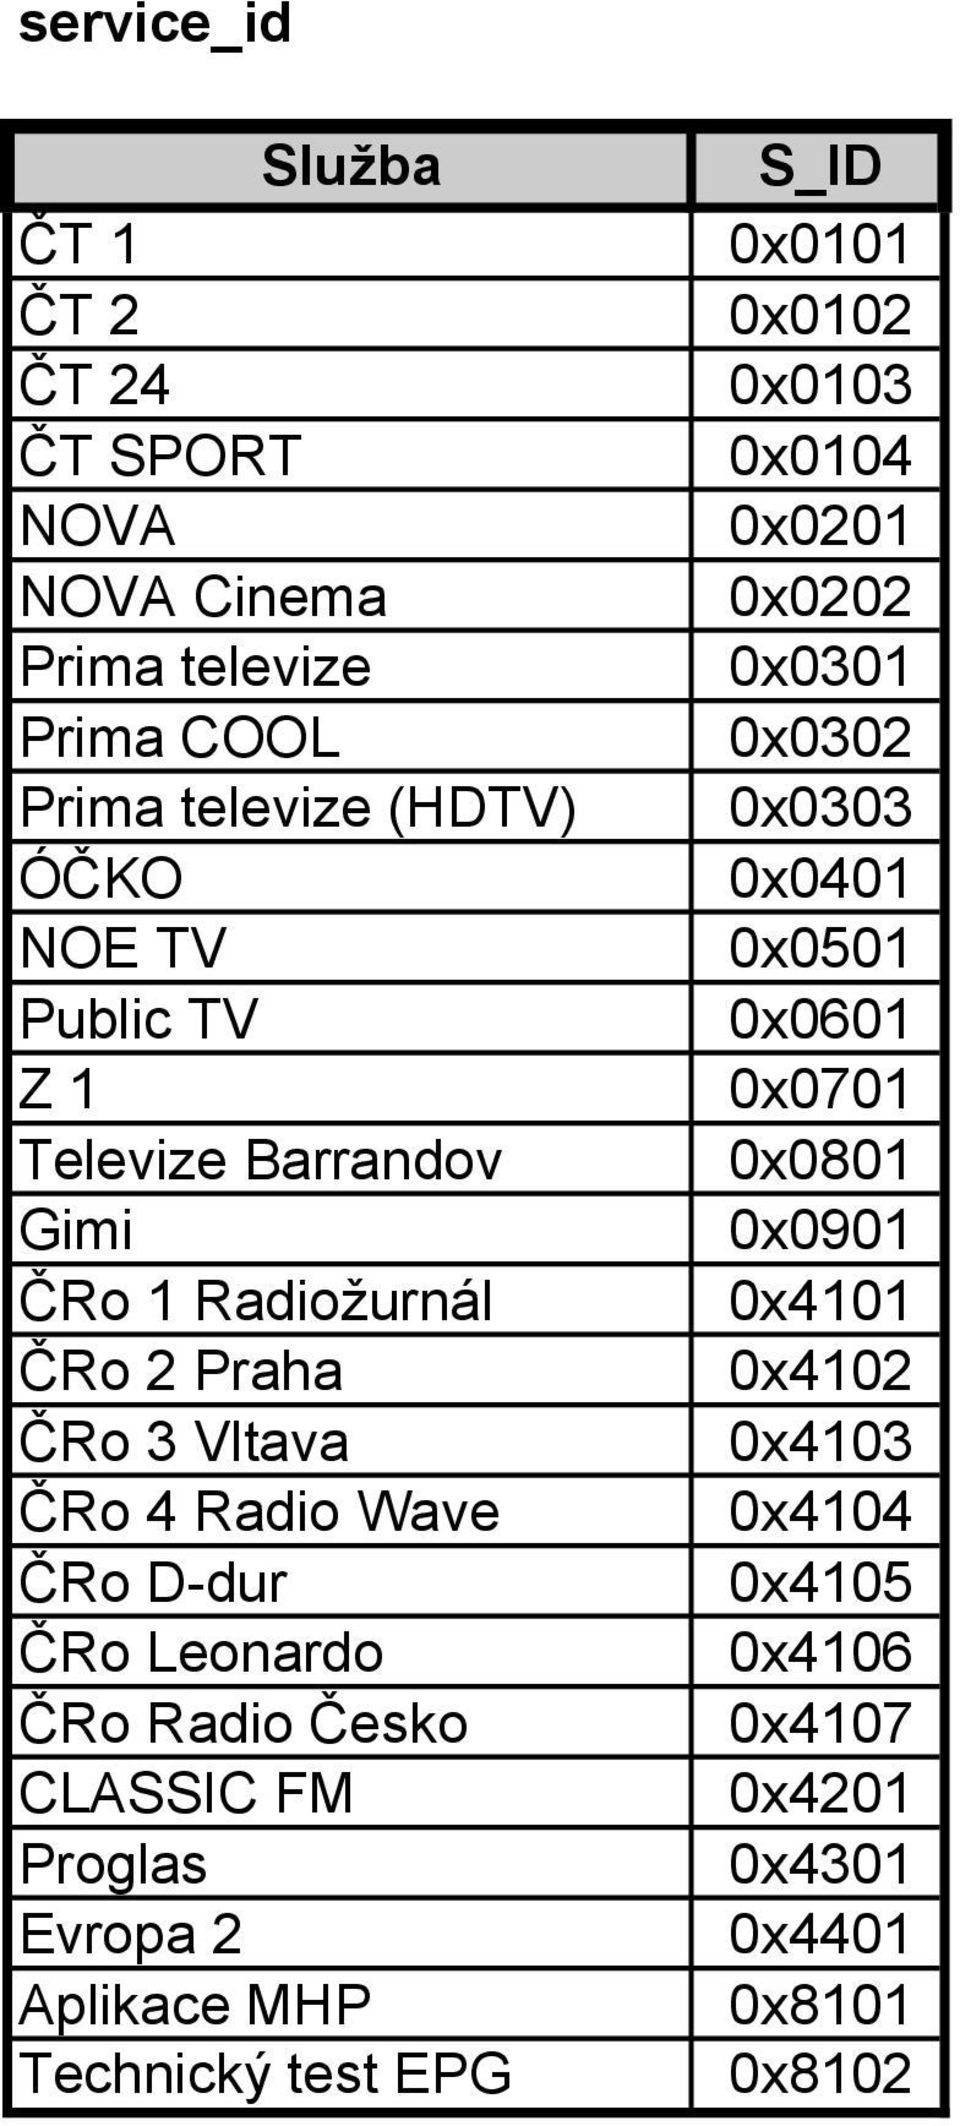 ČRo Radio Česko CLASSIC FM Proglas Evropa 2 Aplikace MHP Technický test EPG S_ID 0x0101 0x0102 0x0103 0x0104 0x0301